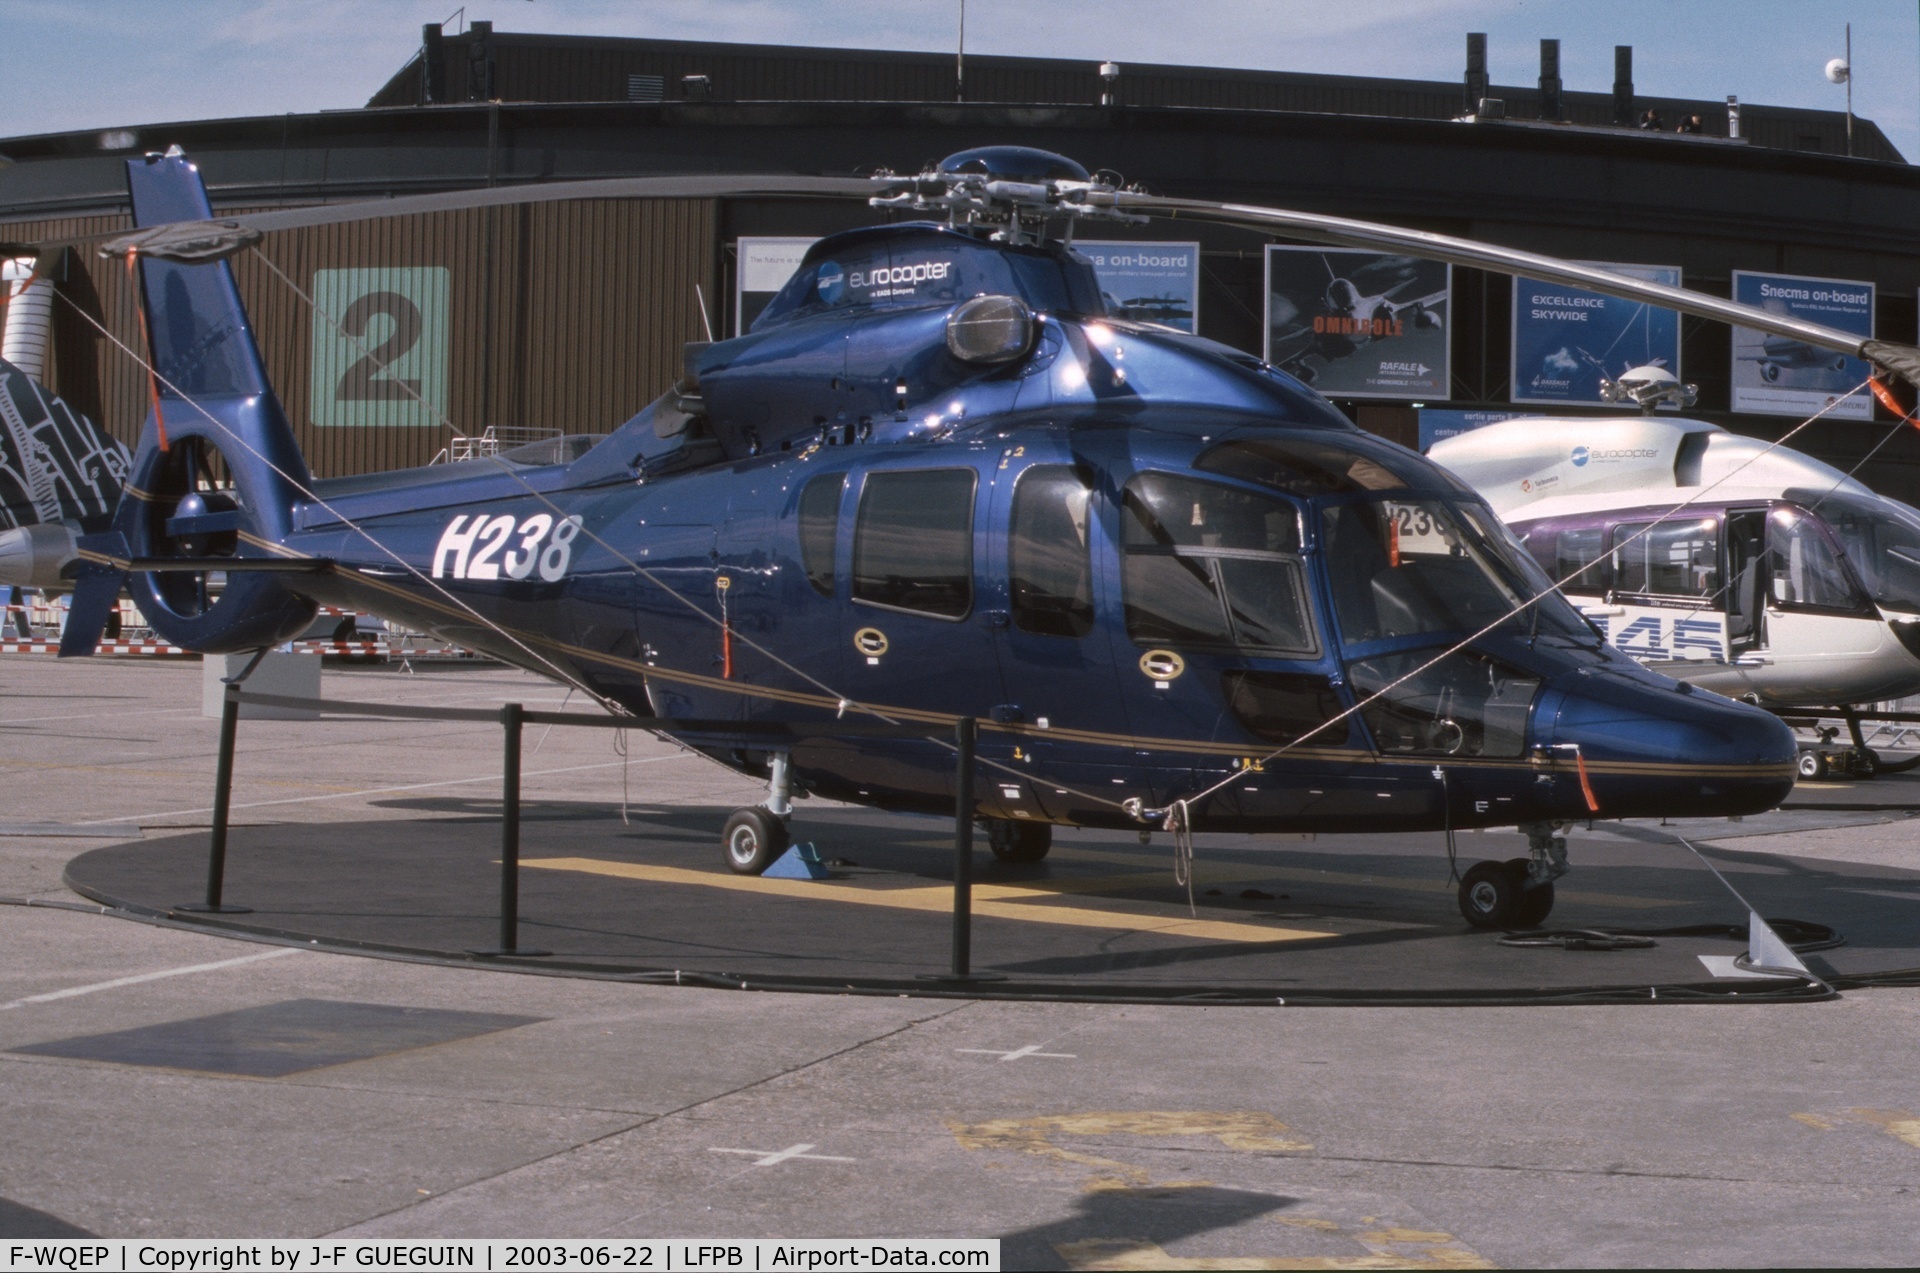 F-WQEP, 2003 Eurocopter EC-155B-1 C/N 6652, On display at 2003 Paris-Le Bourget airshow.